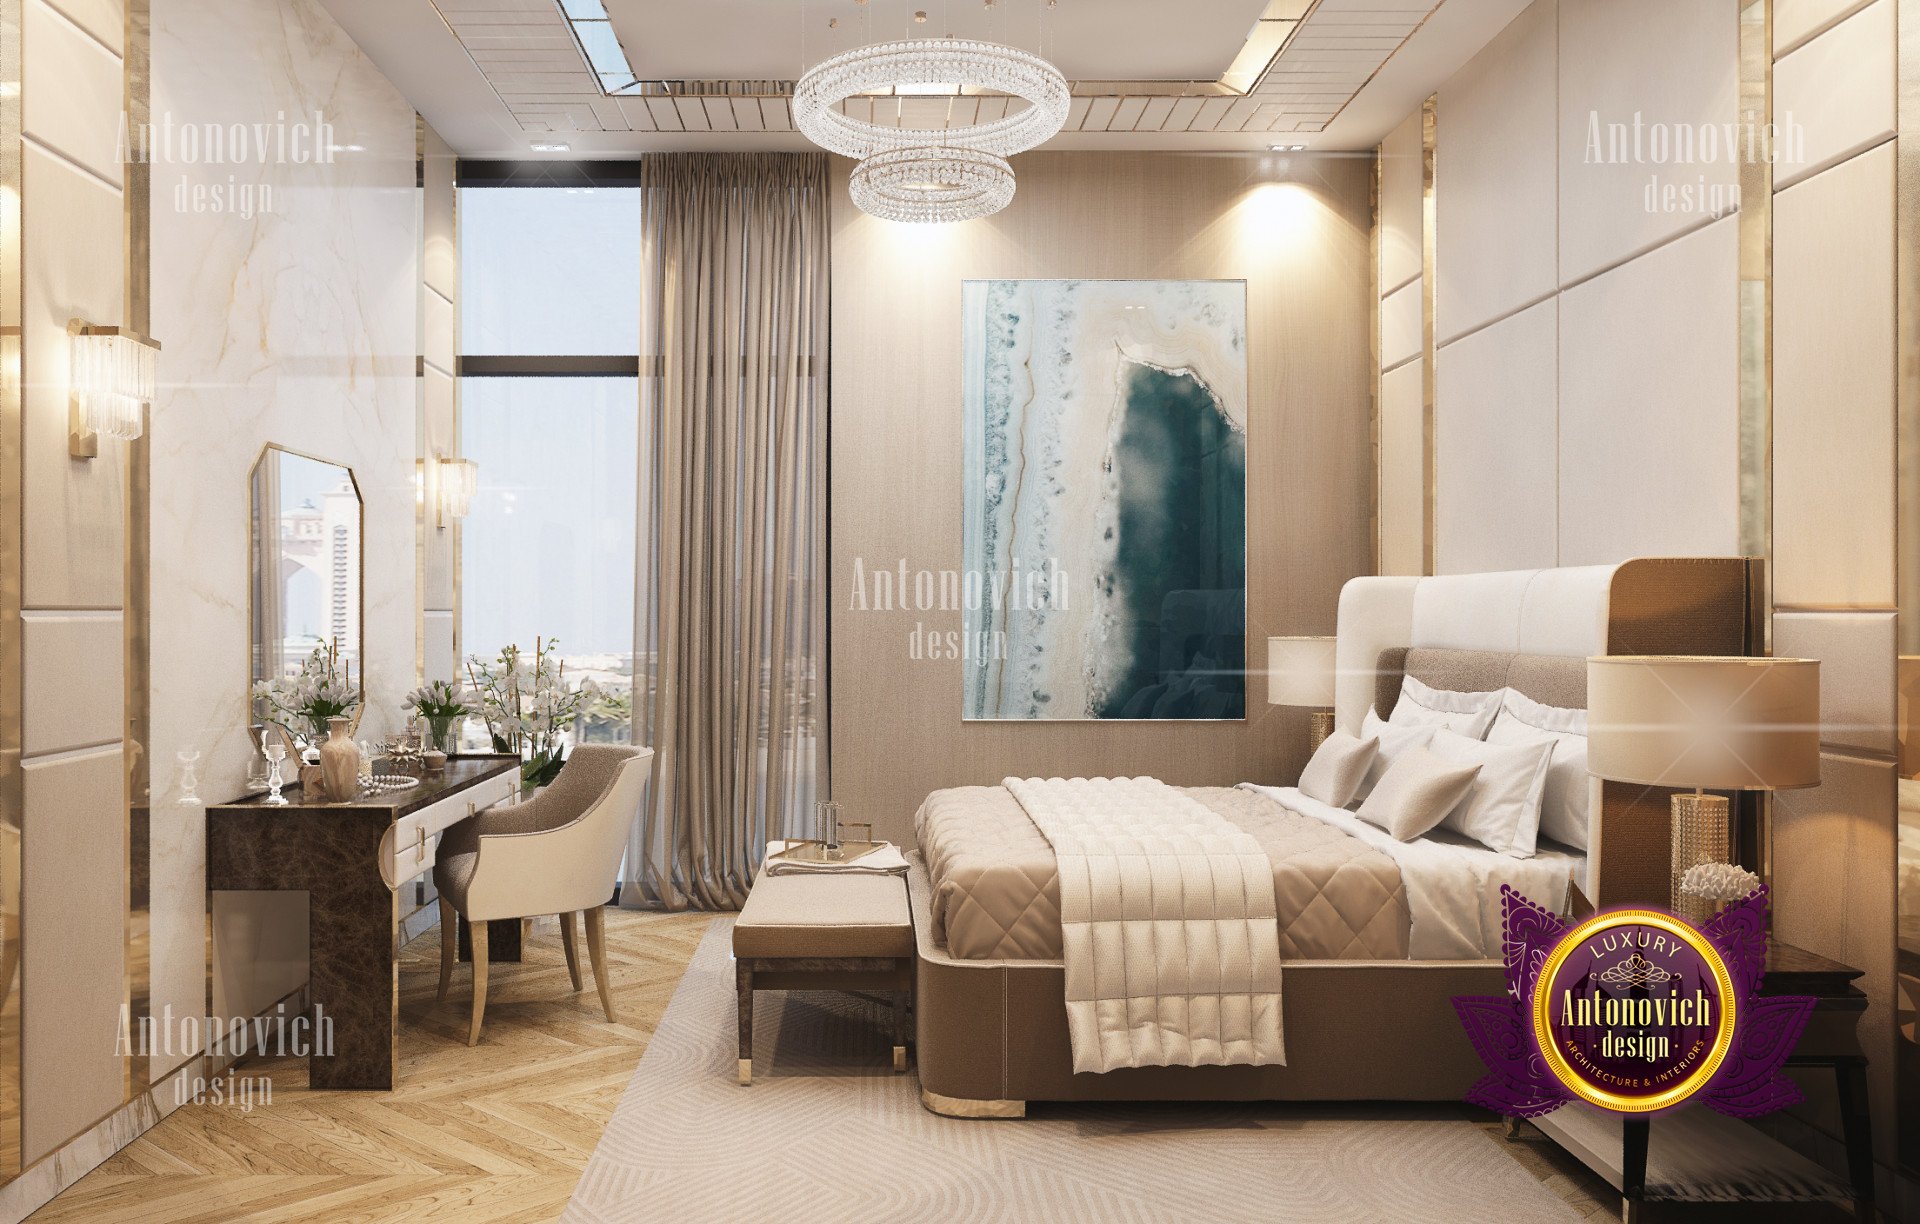 Modern bedroom decor ideas